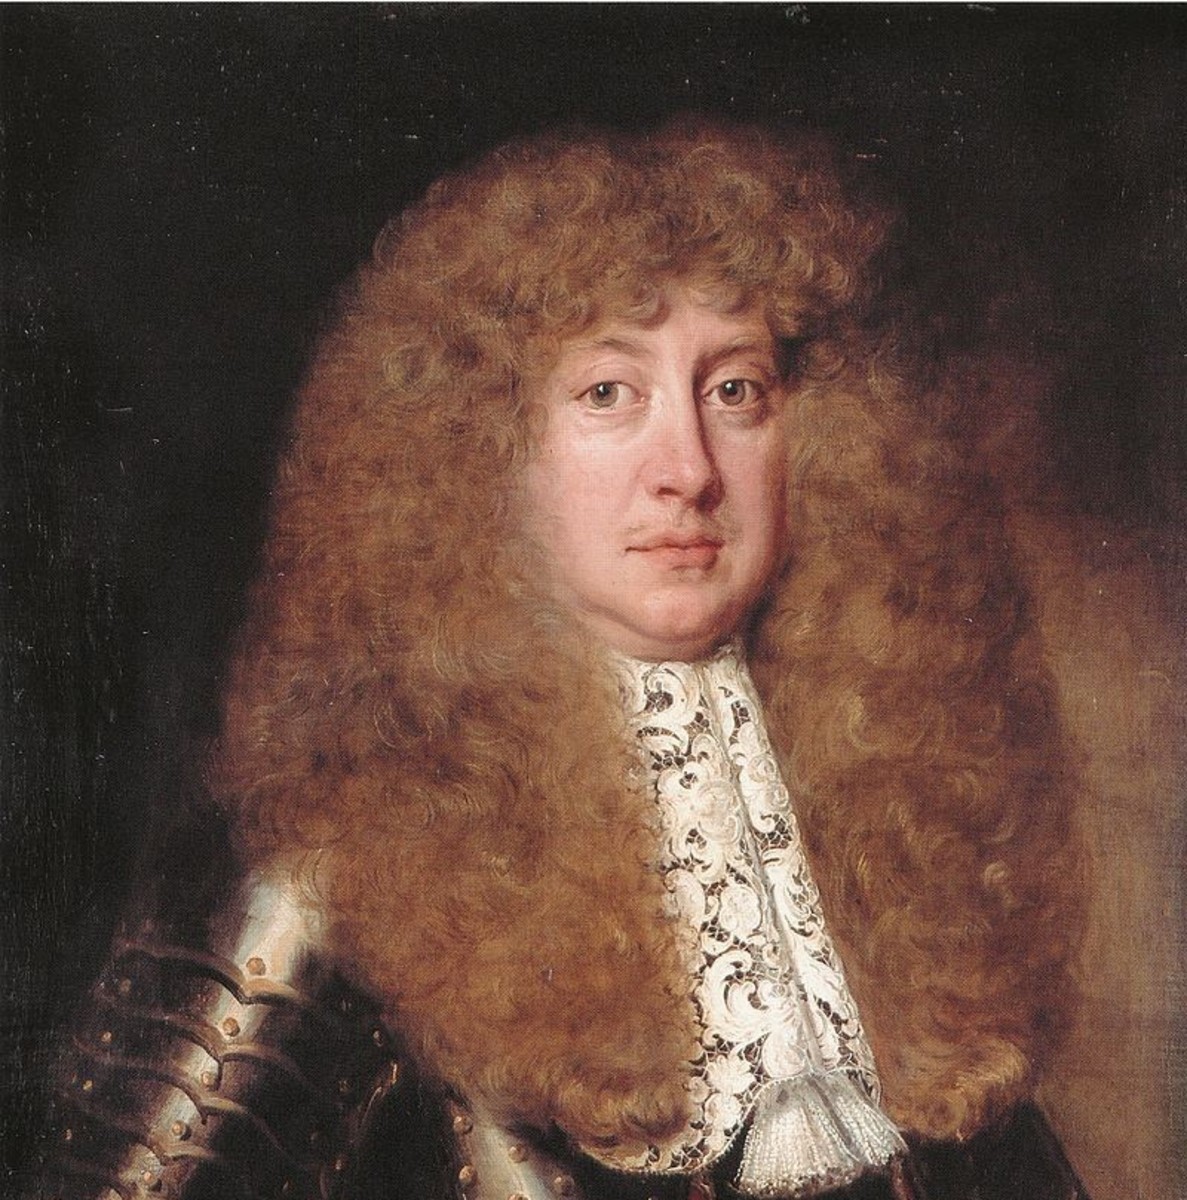 Ernst August, Elector of Hanover, was Sophia Dorothea's husband. 